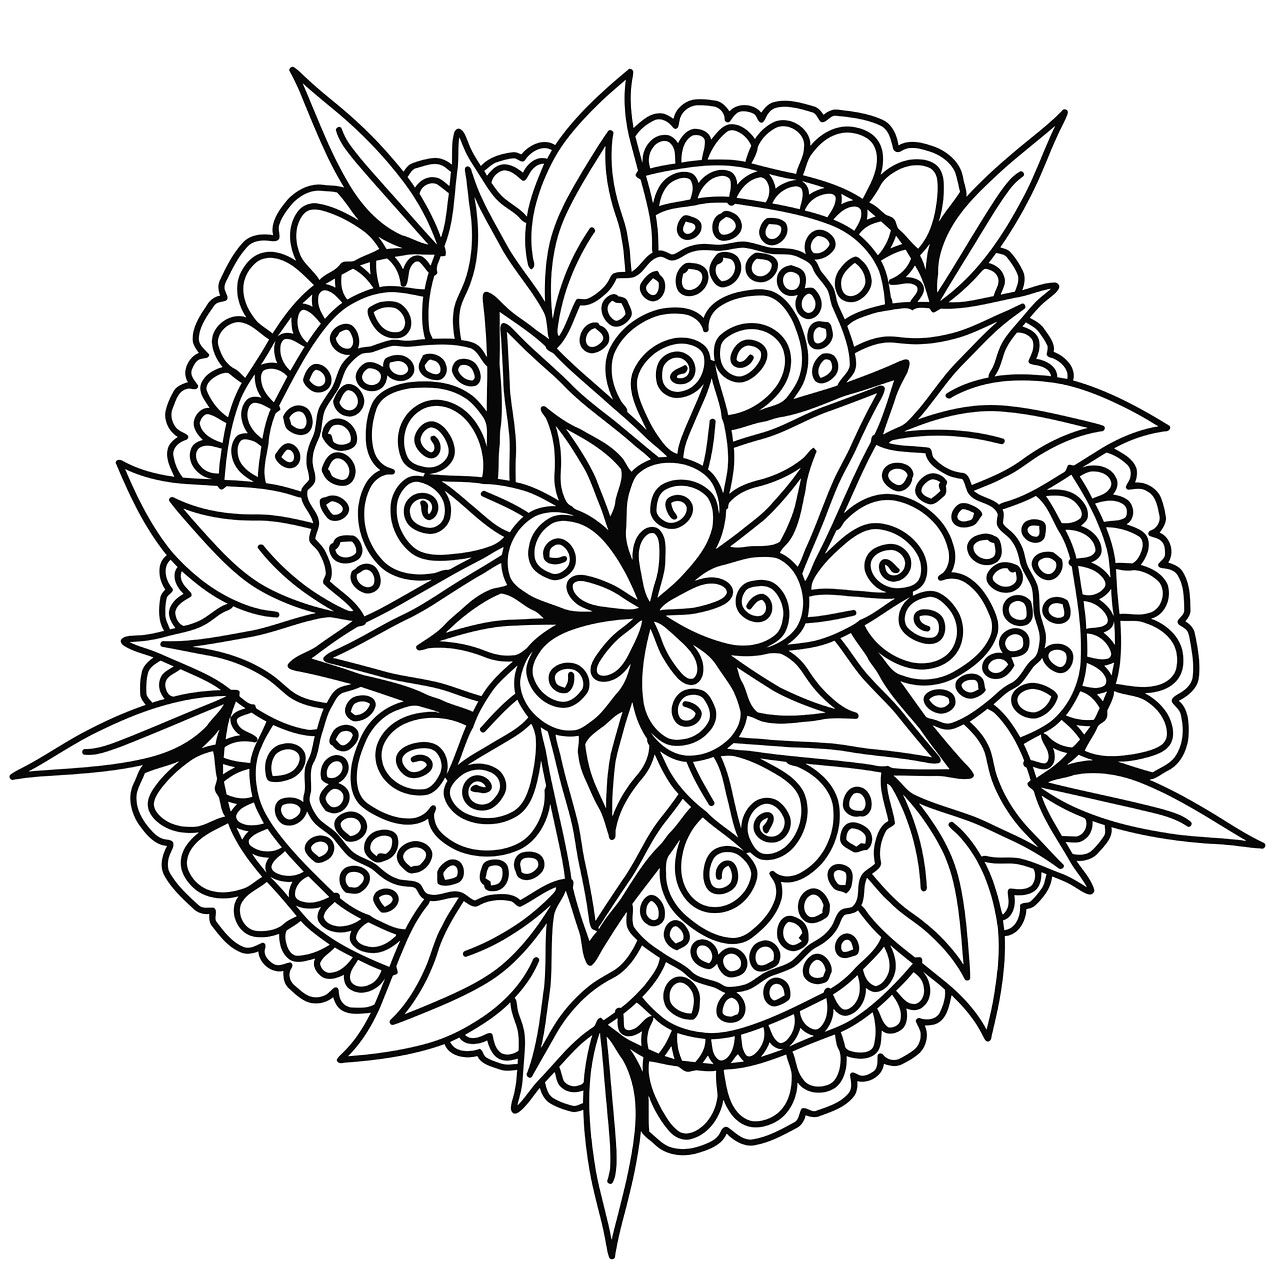 Awesome hand drawn Mandala - Mandalas Adult Coloring Pages